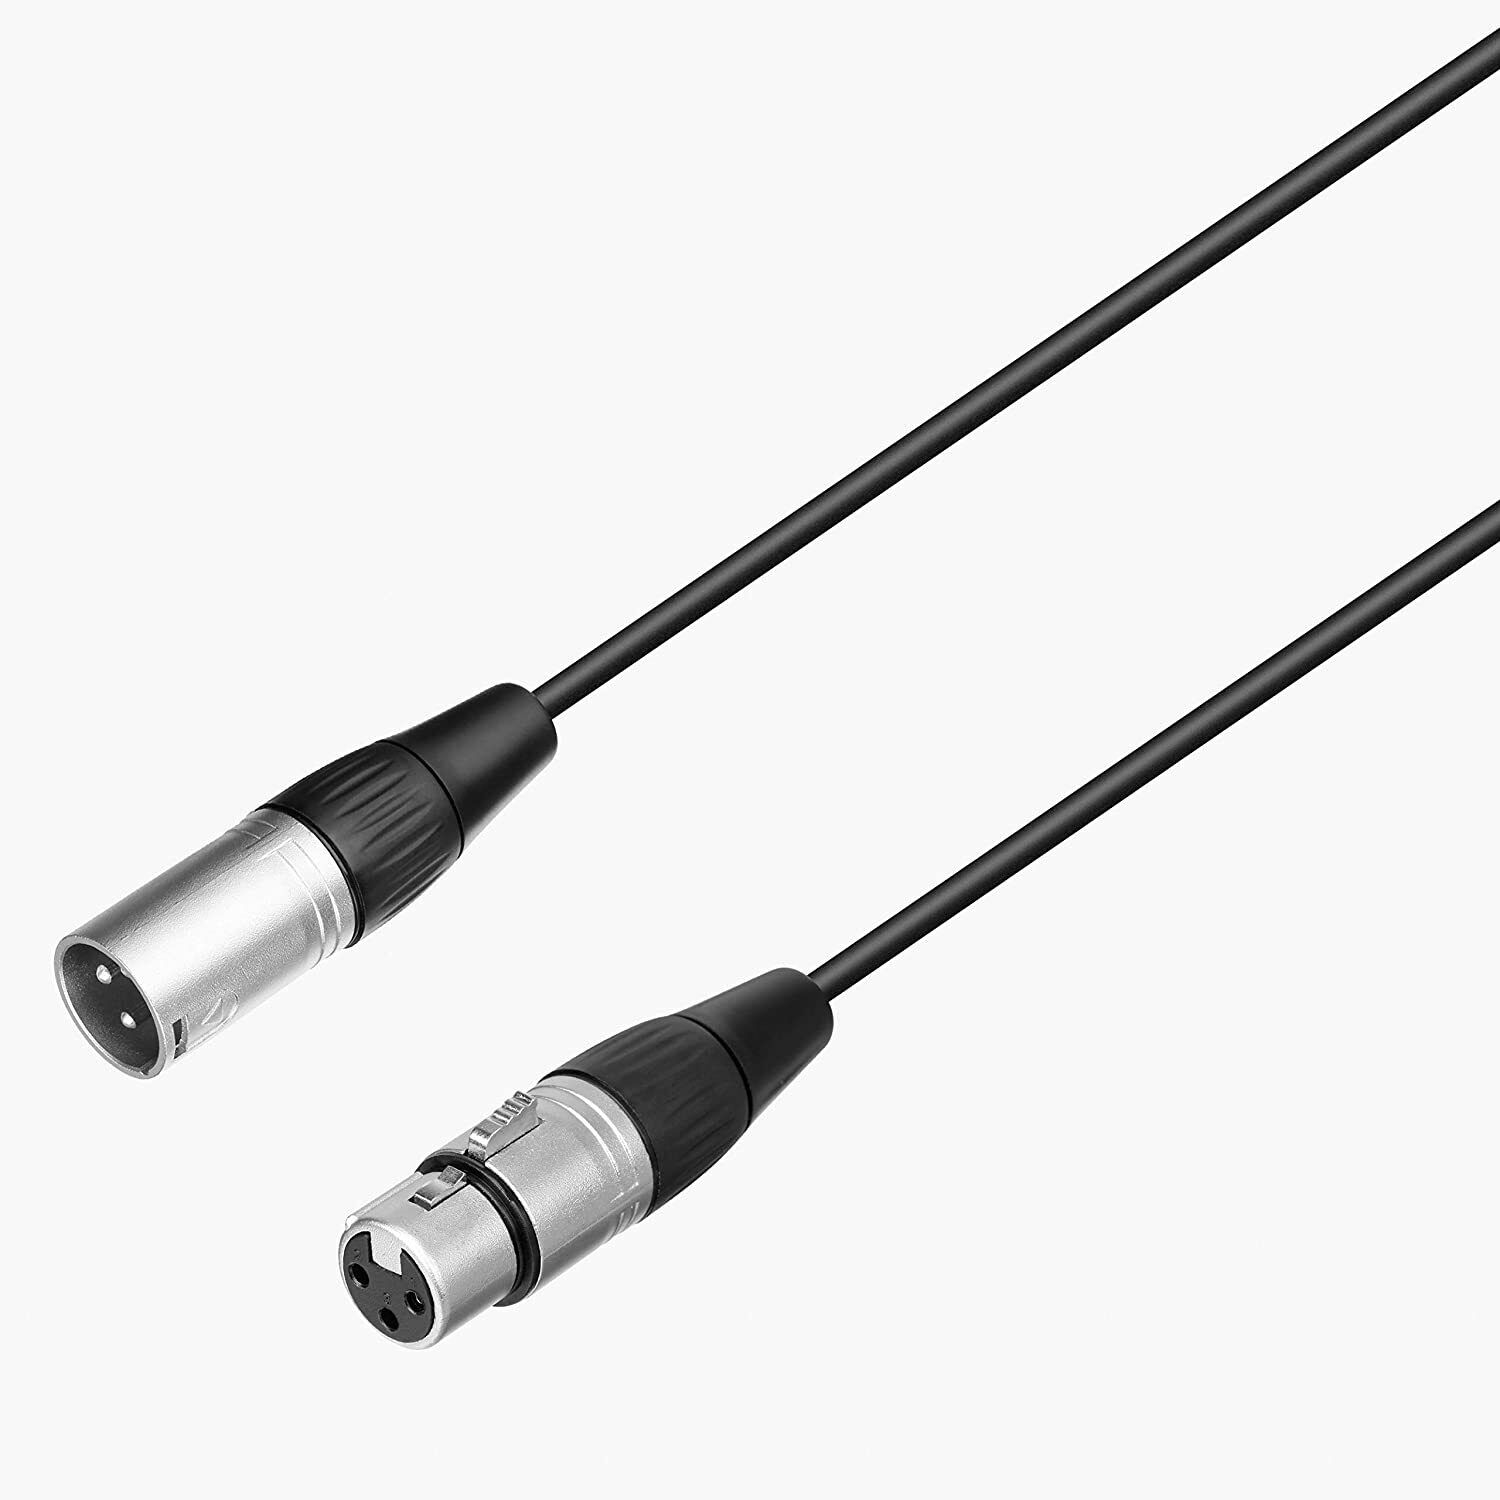 Saramonic SR-XC3000 9.84FT (3m) Male to Female 3-Pin XLR Mic Cable for Studio